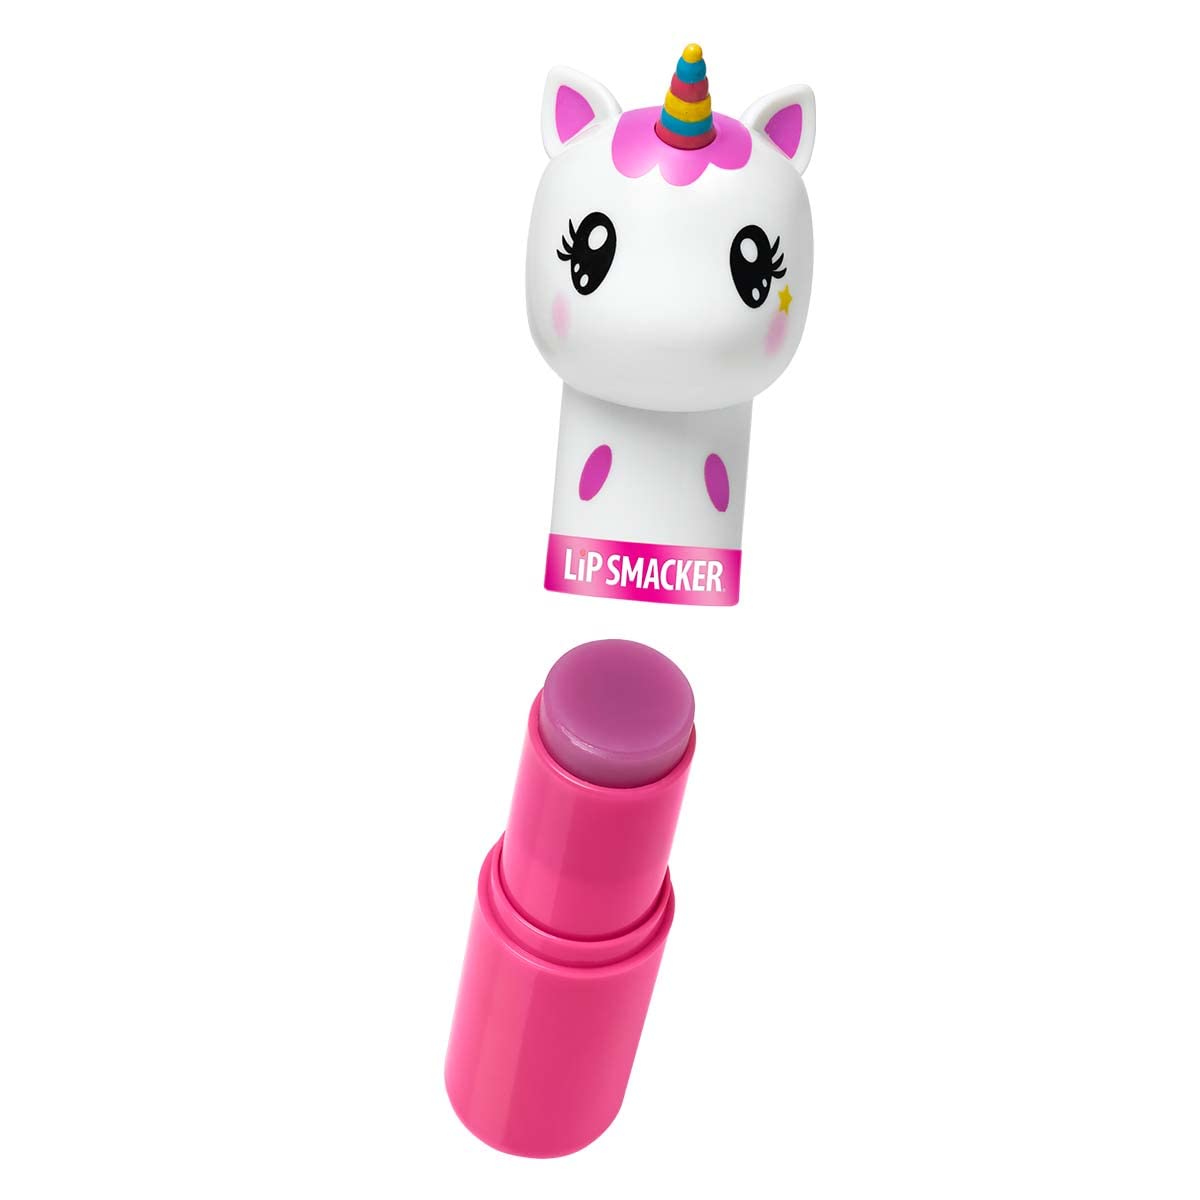 Lip Smacker Lippy Pals Unicorn, Flavored Moisturizing & Smoothing Soft Shine Lip Balm, Hydrating & Protecting Fun Tasty Flavors, Cruelty-Free & Vegan - Unicorn Magic : Beauty & Personal Care